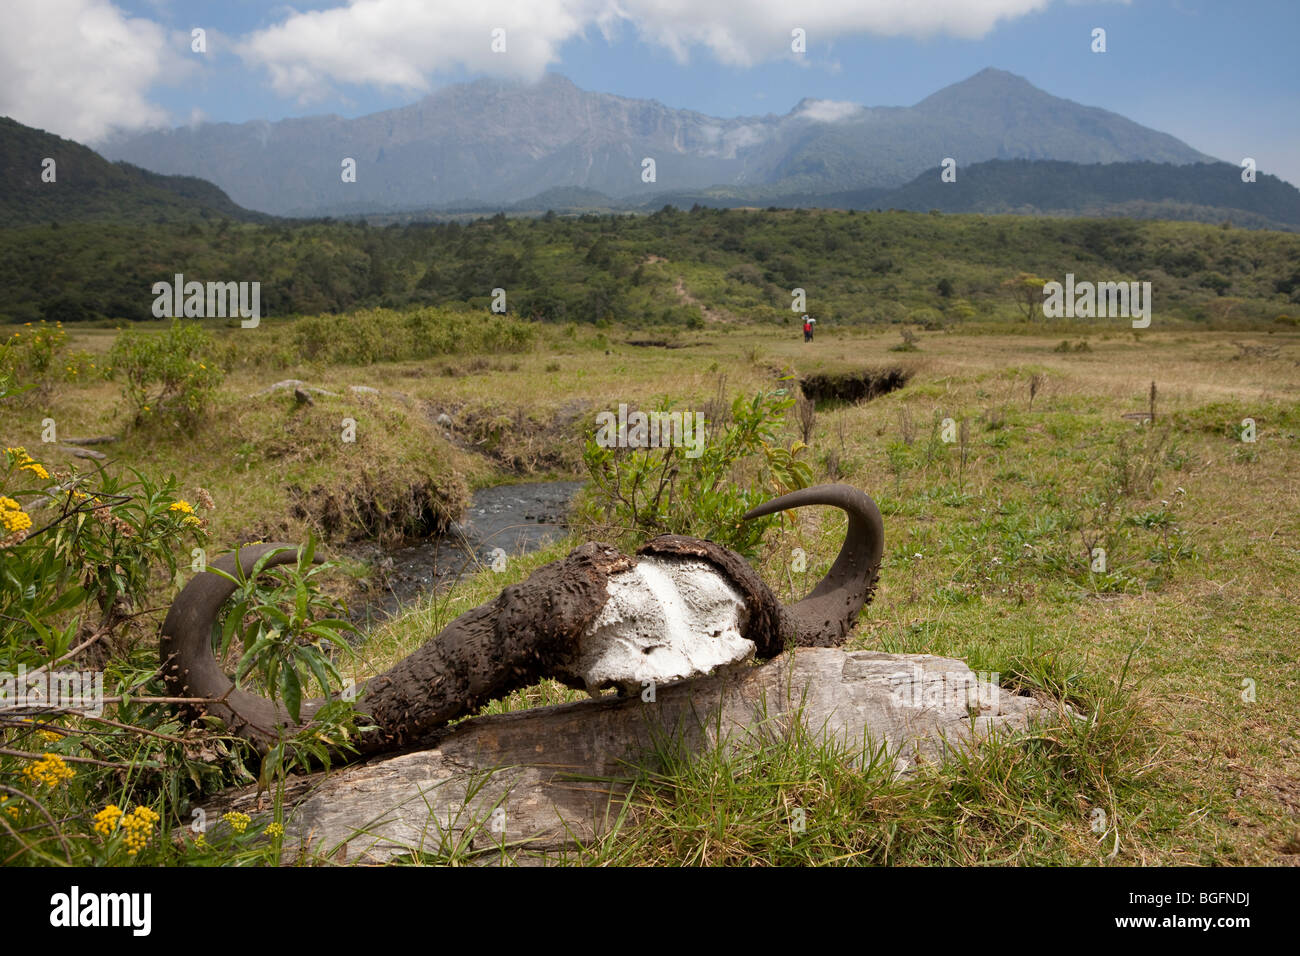 Cape Buffalo horns, Arusha National Park, Tanzania, East Africa. Stock Photo